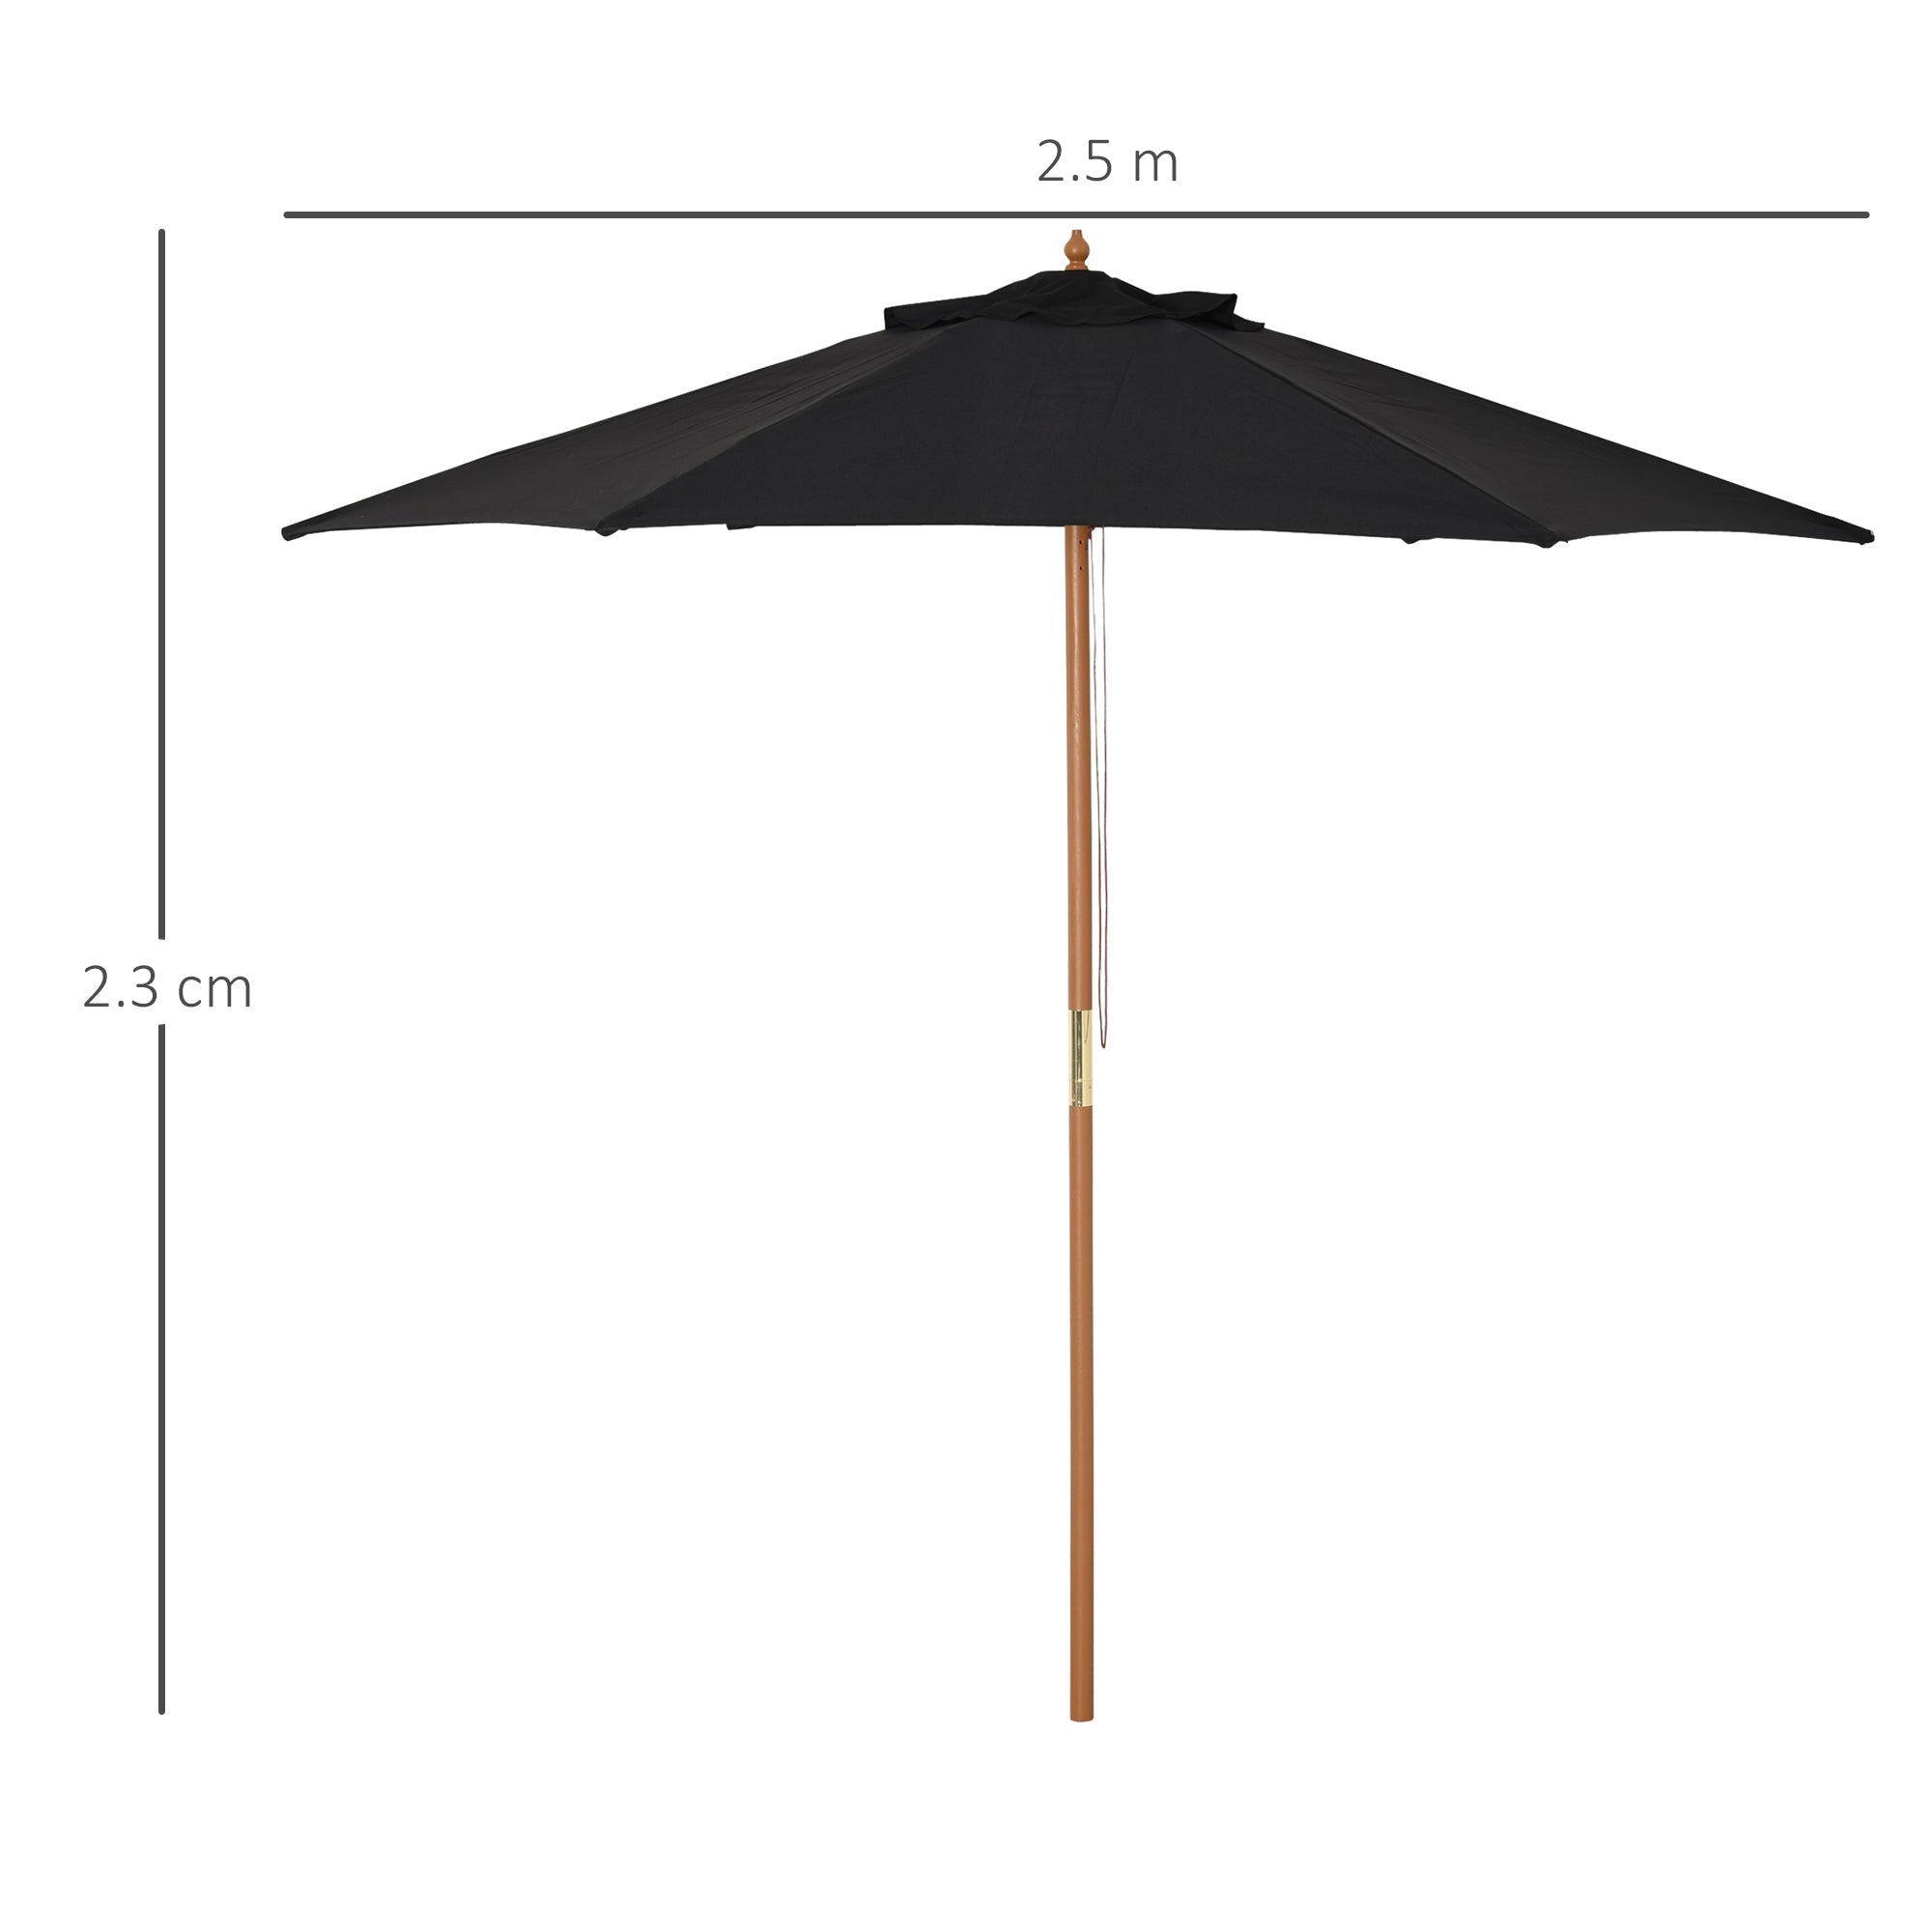 2.5m Wood Garden Parasol Sun Shade Patio Outdoor Wooden Umbrella Canopy Black-2